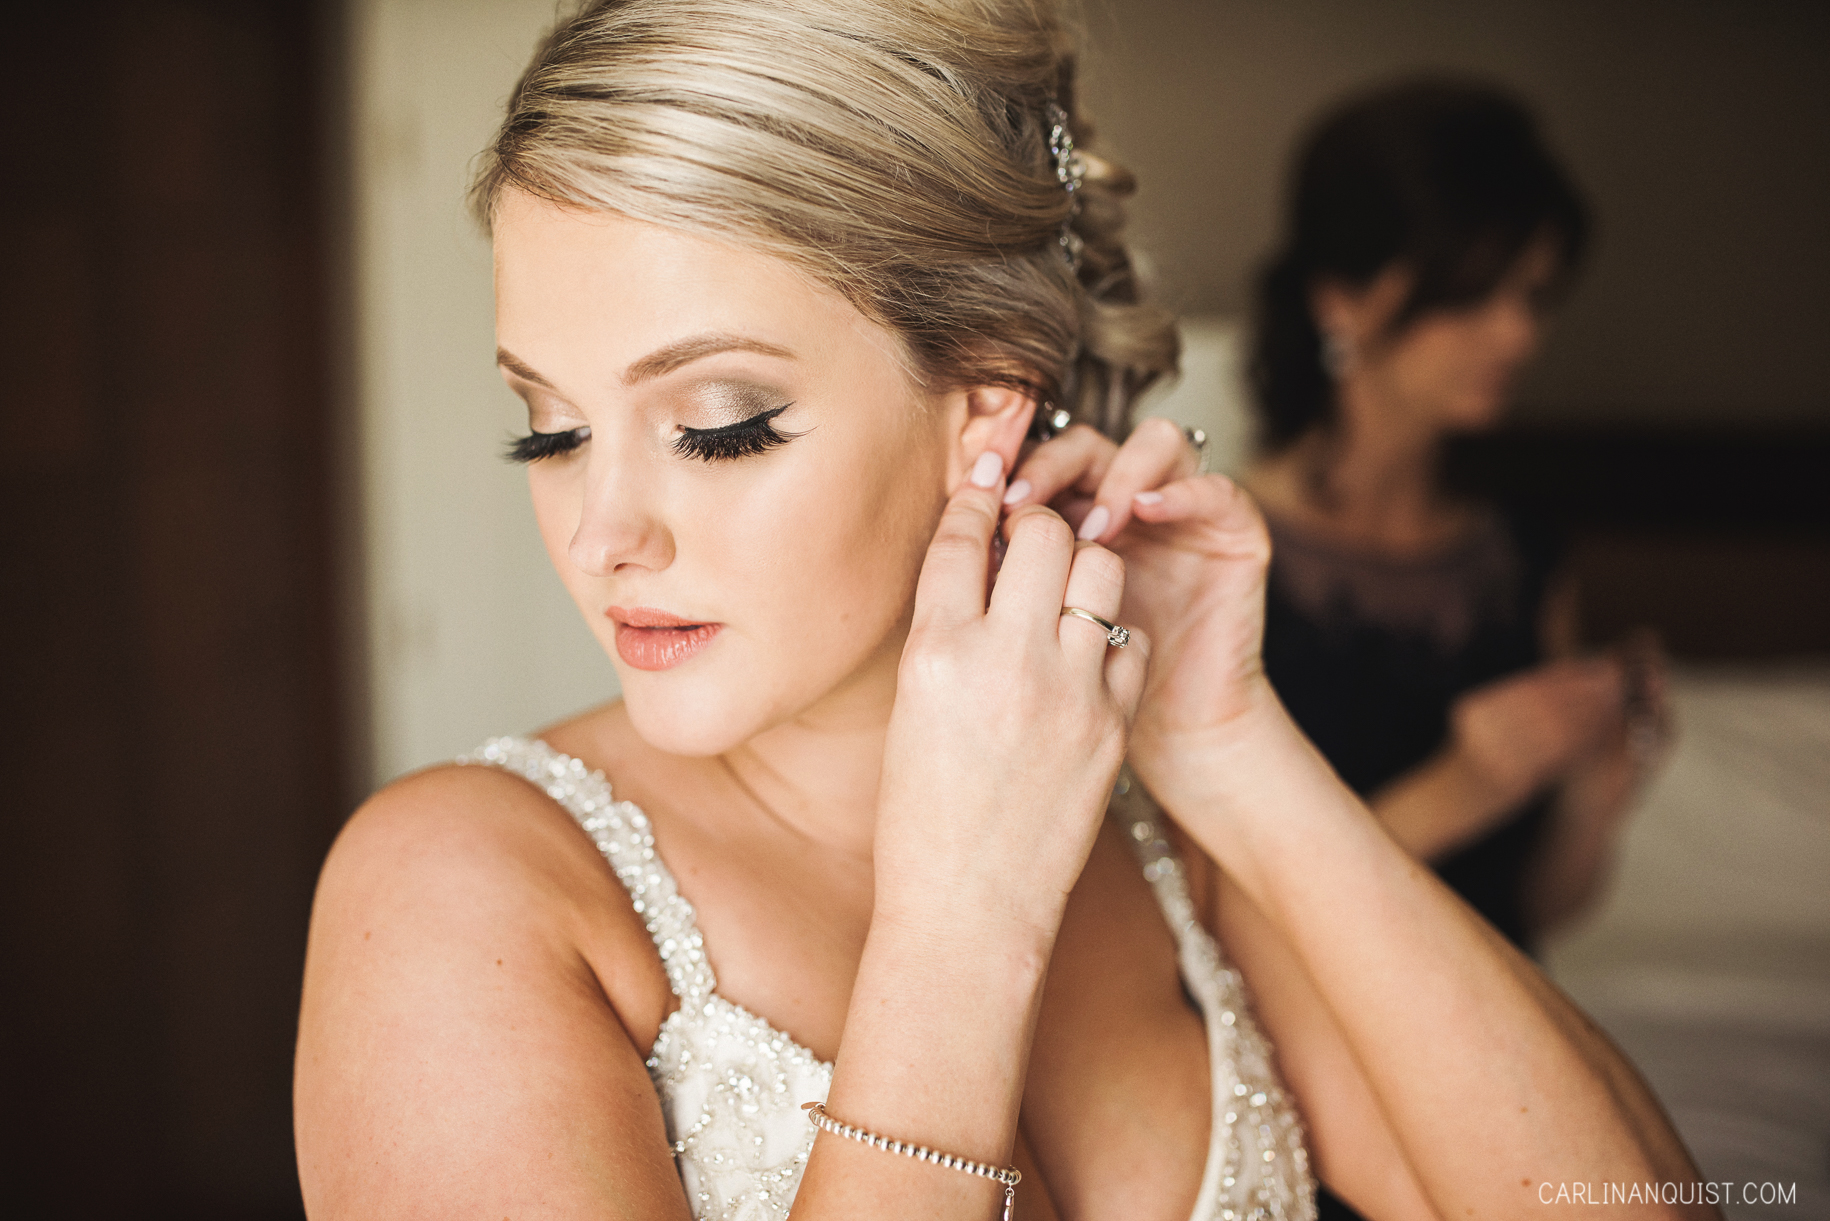 Carlin Anquist | Apple Creek Wedding Photographer